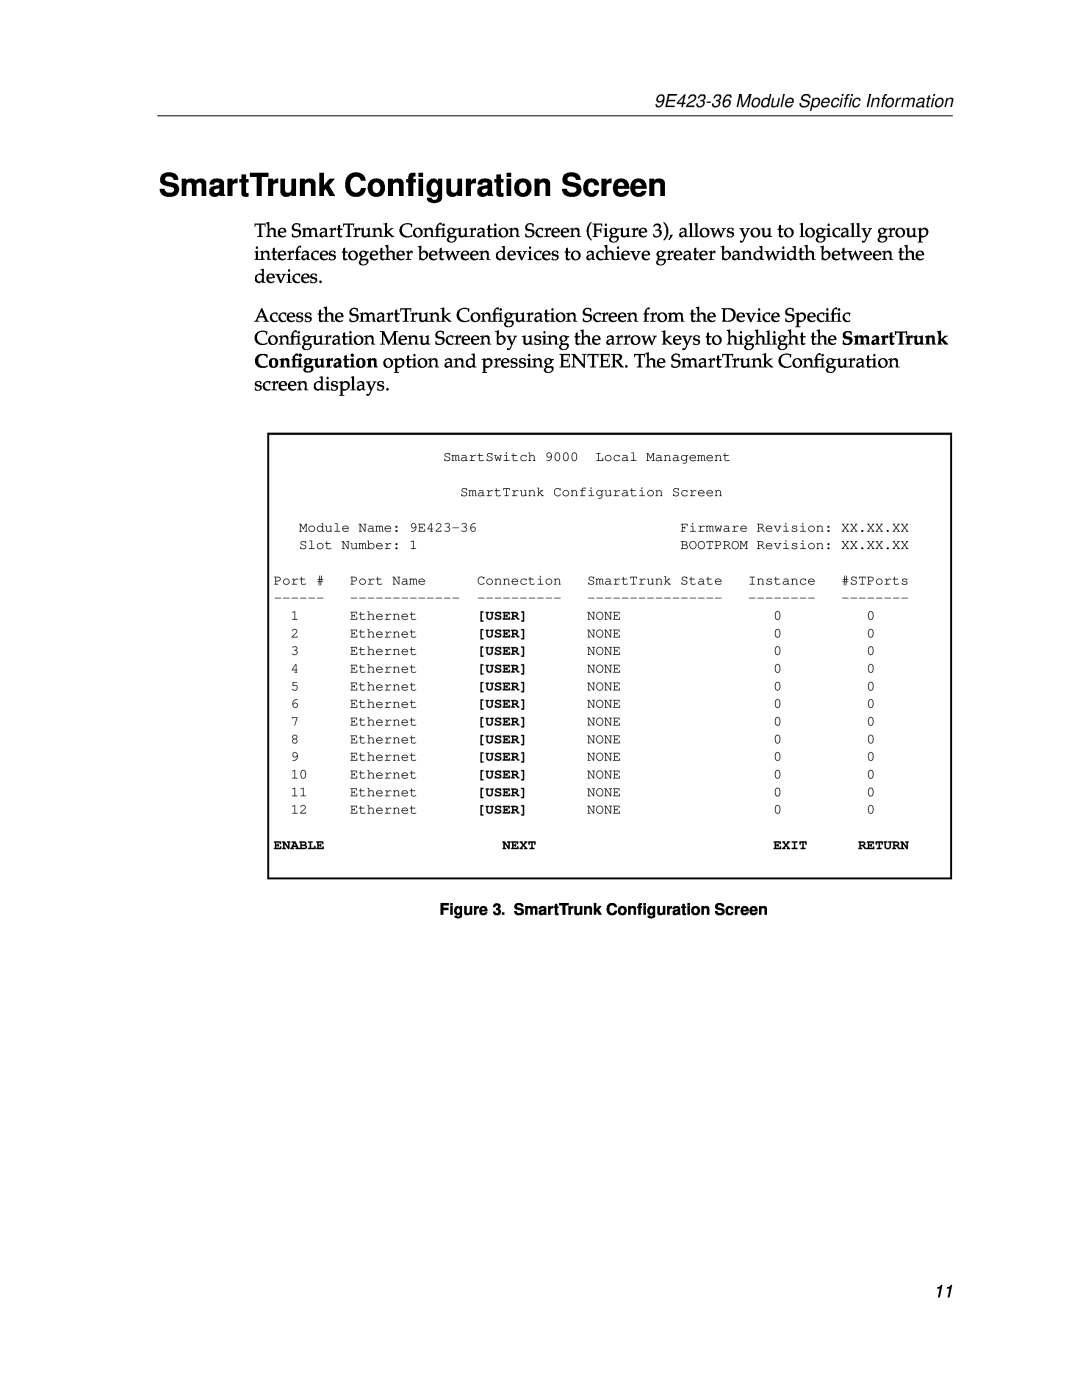 Cabletron Systems 9E423-36 appendix SmartTrunk Conﬁguration Screen 